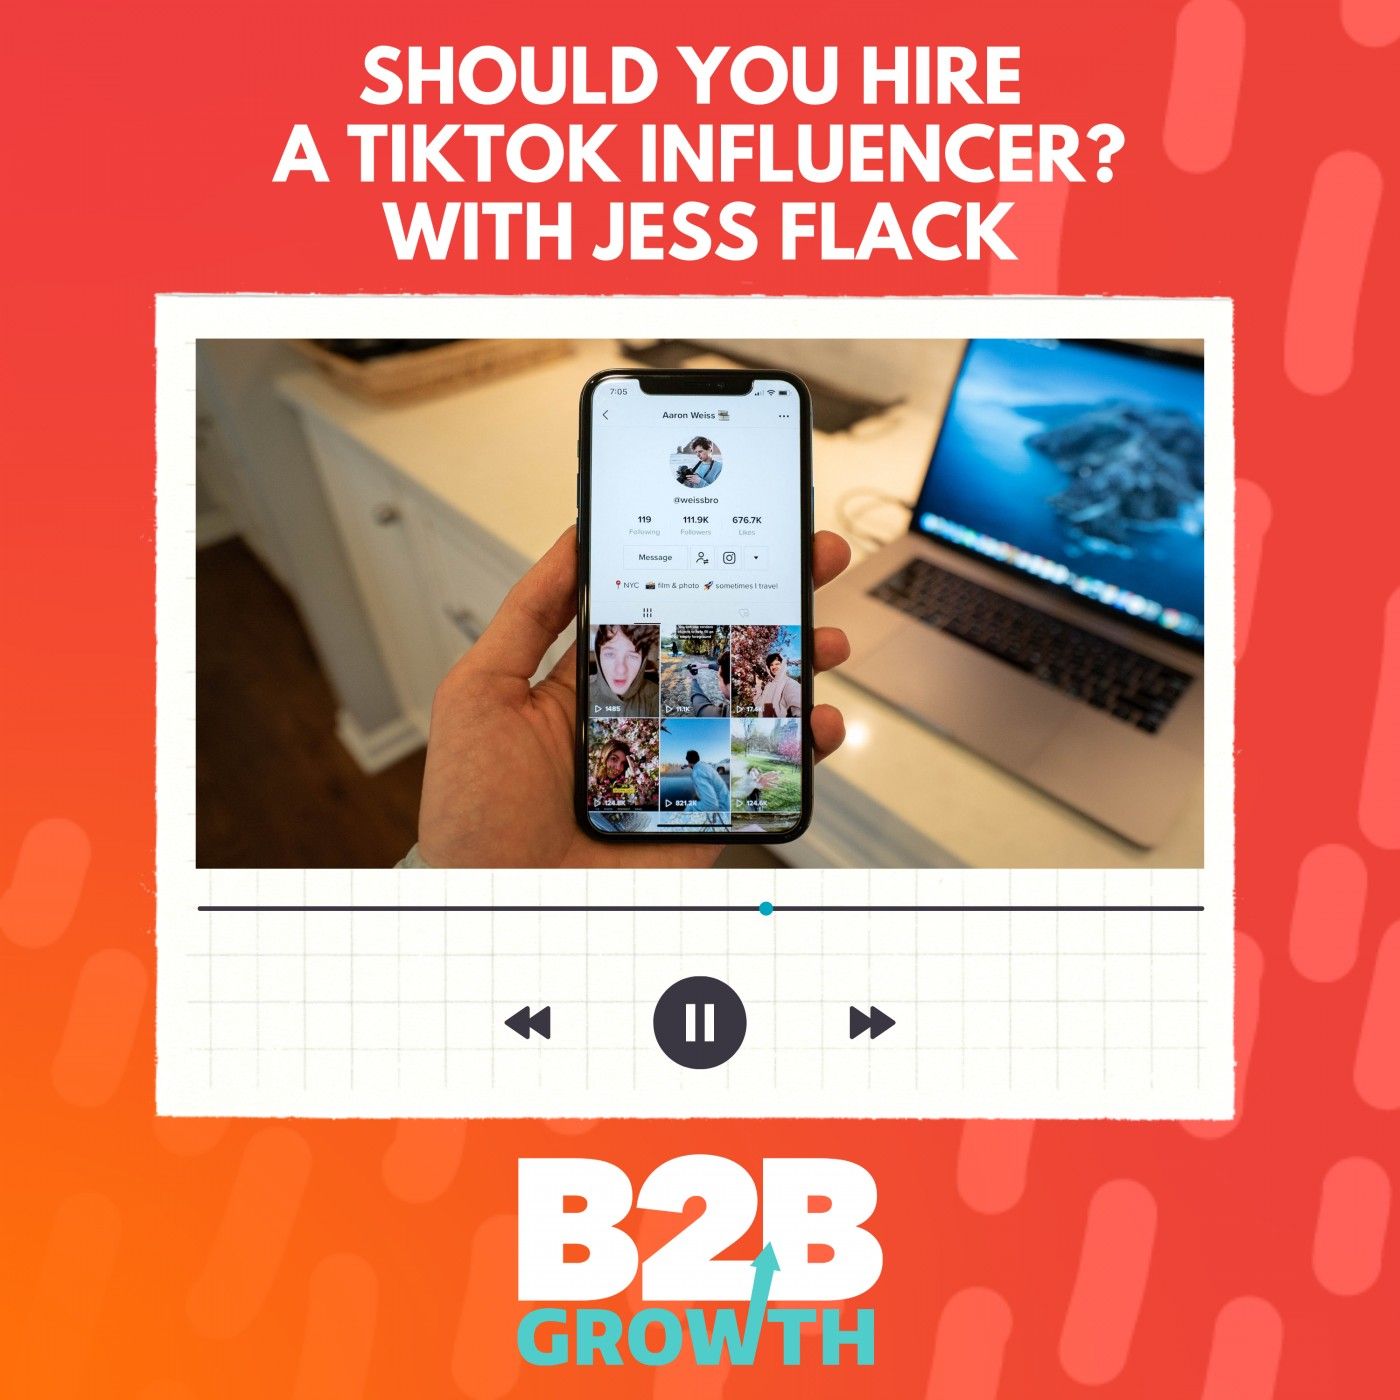 Should You Hire a TikTok Influencer? with Jess Flack